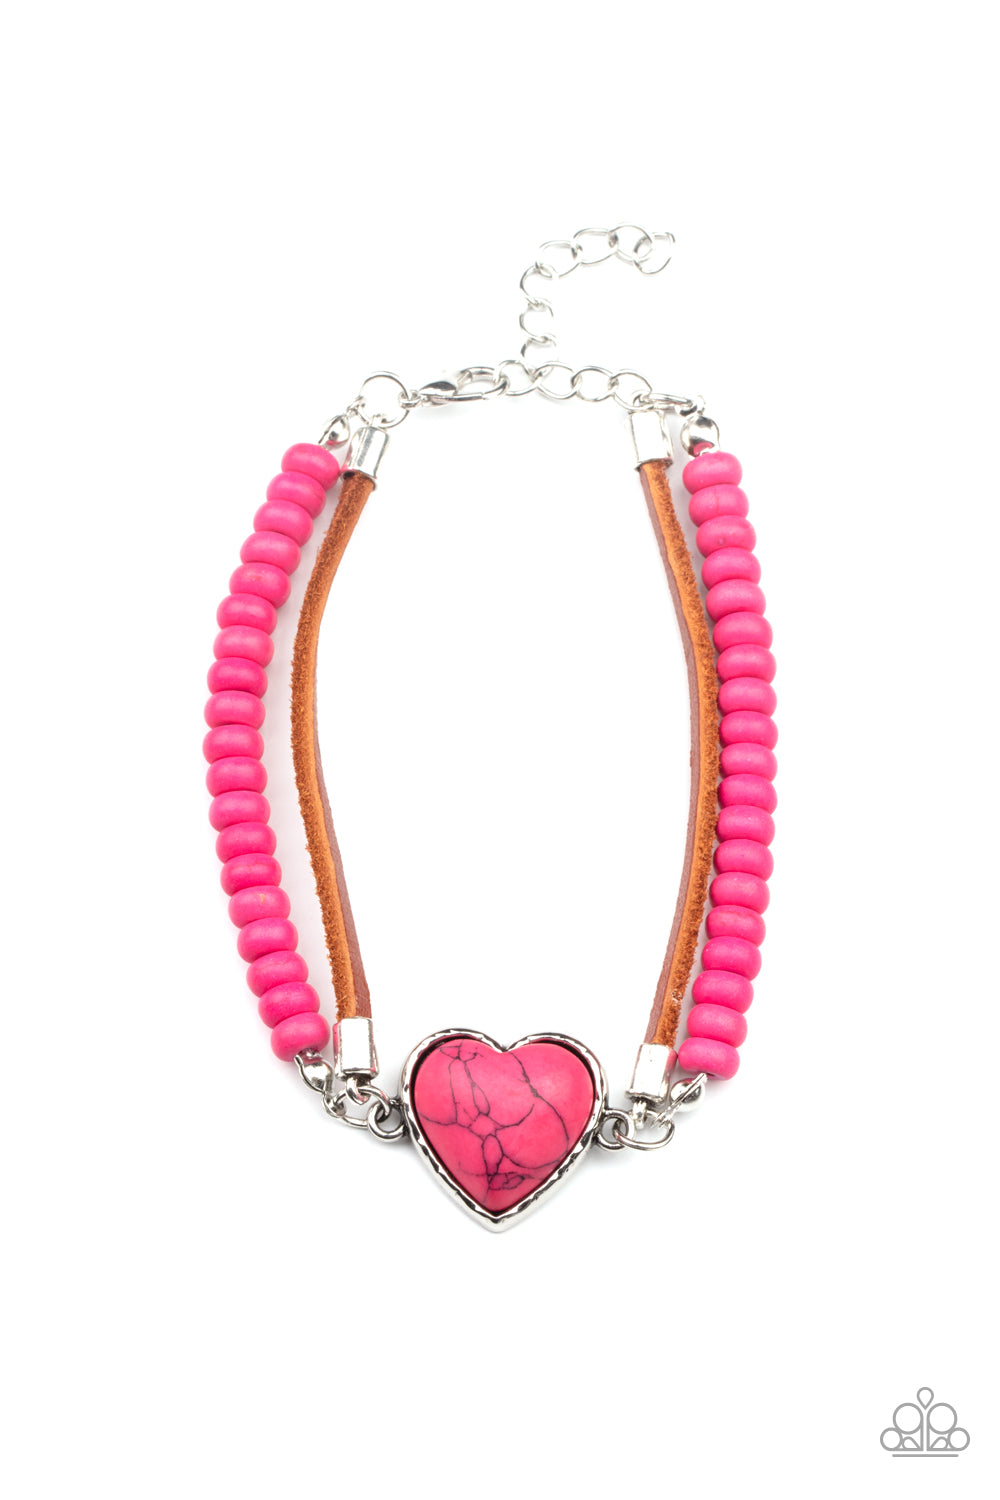 Paparazzi Bracelet  Really Romantic  Pink  Paparazzi Jewelry  Online  Store  DebsJewelryShopcom